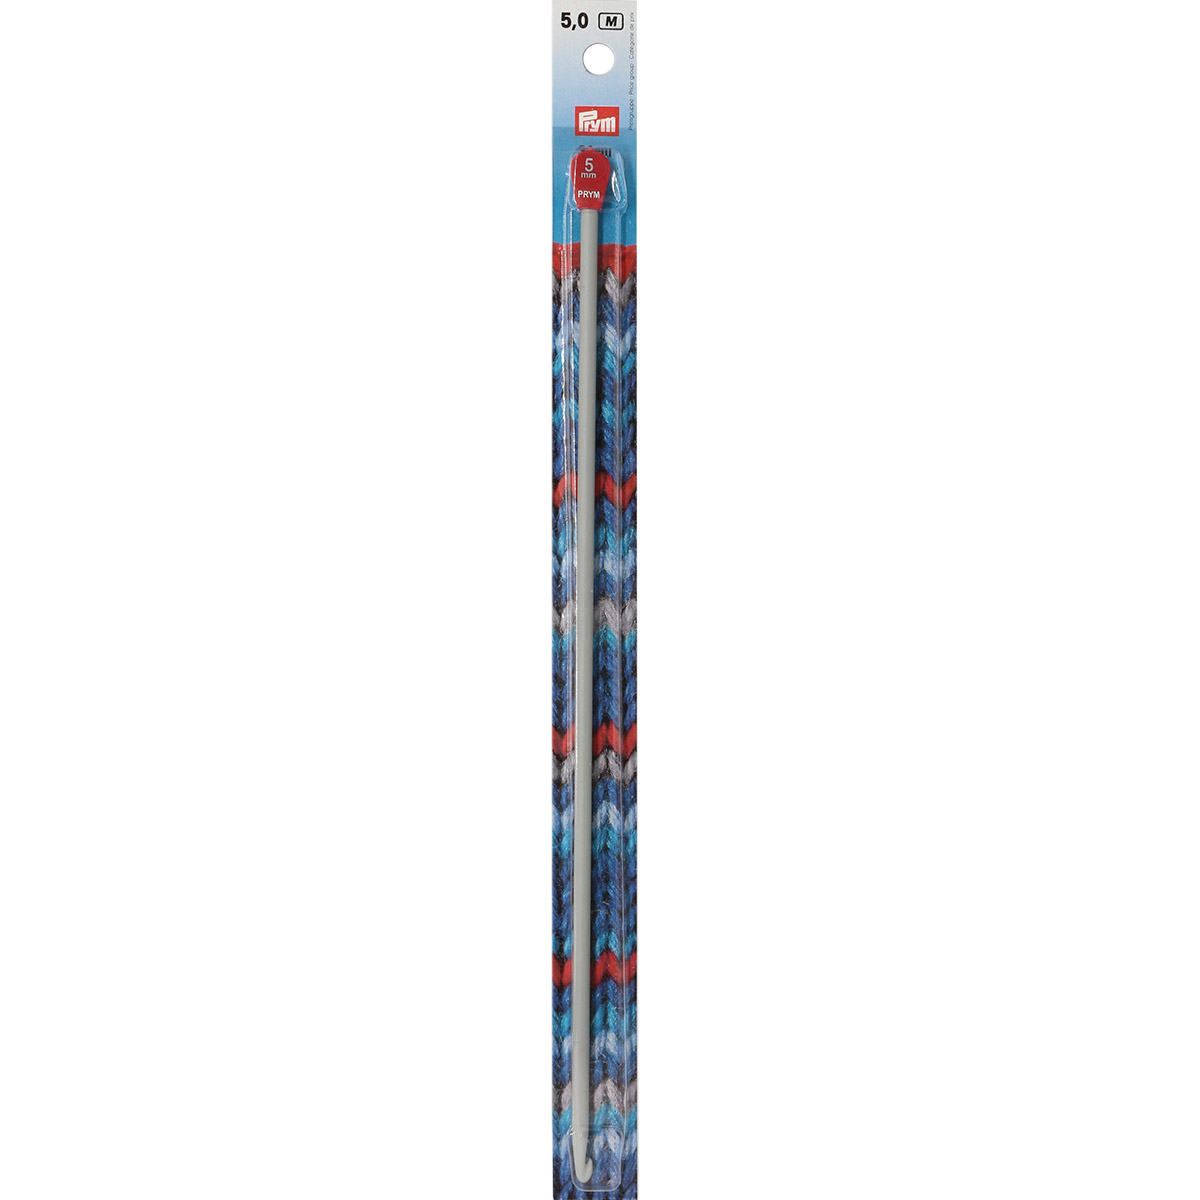 195219 Крючок для вязания тунисский, 5 мм*30 см, Prym